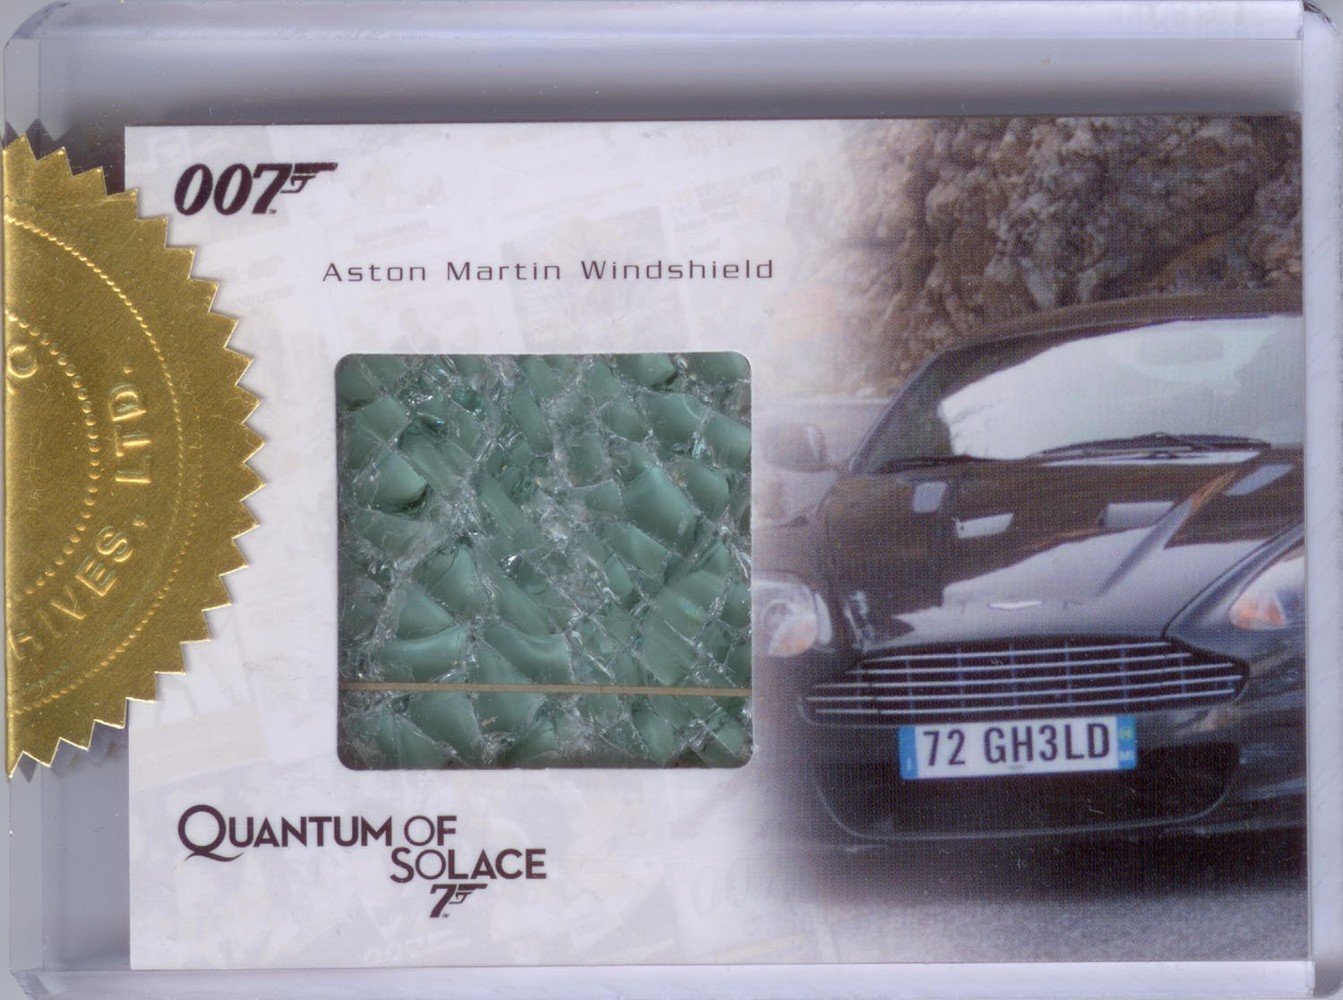 Rittenhouse Archives James Bond Archives Case Topper Relic Card AMR1 Aston Marton Windshield